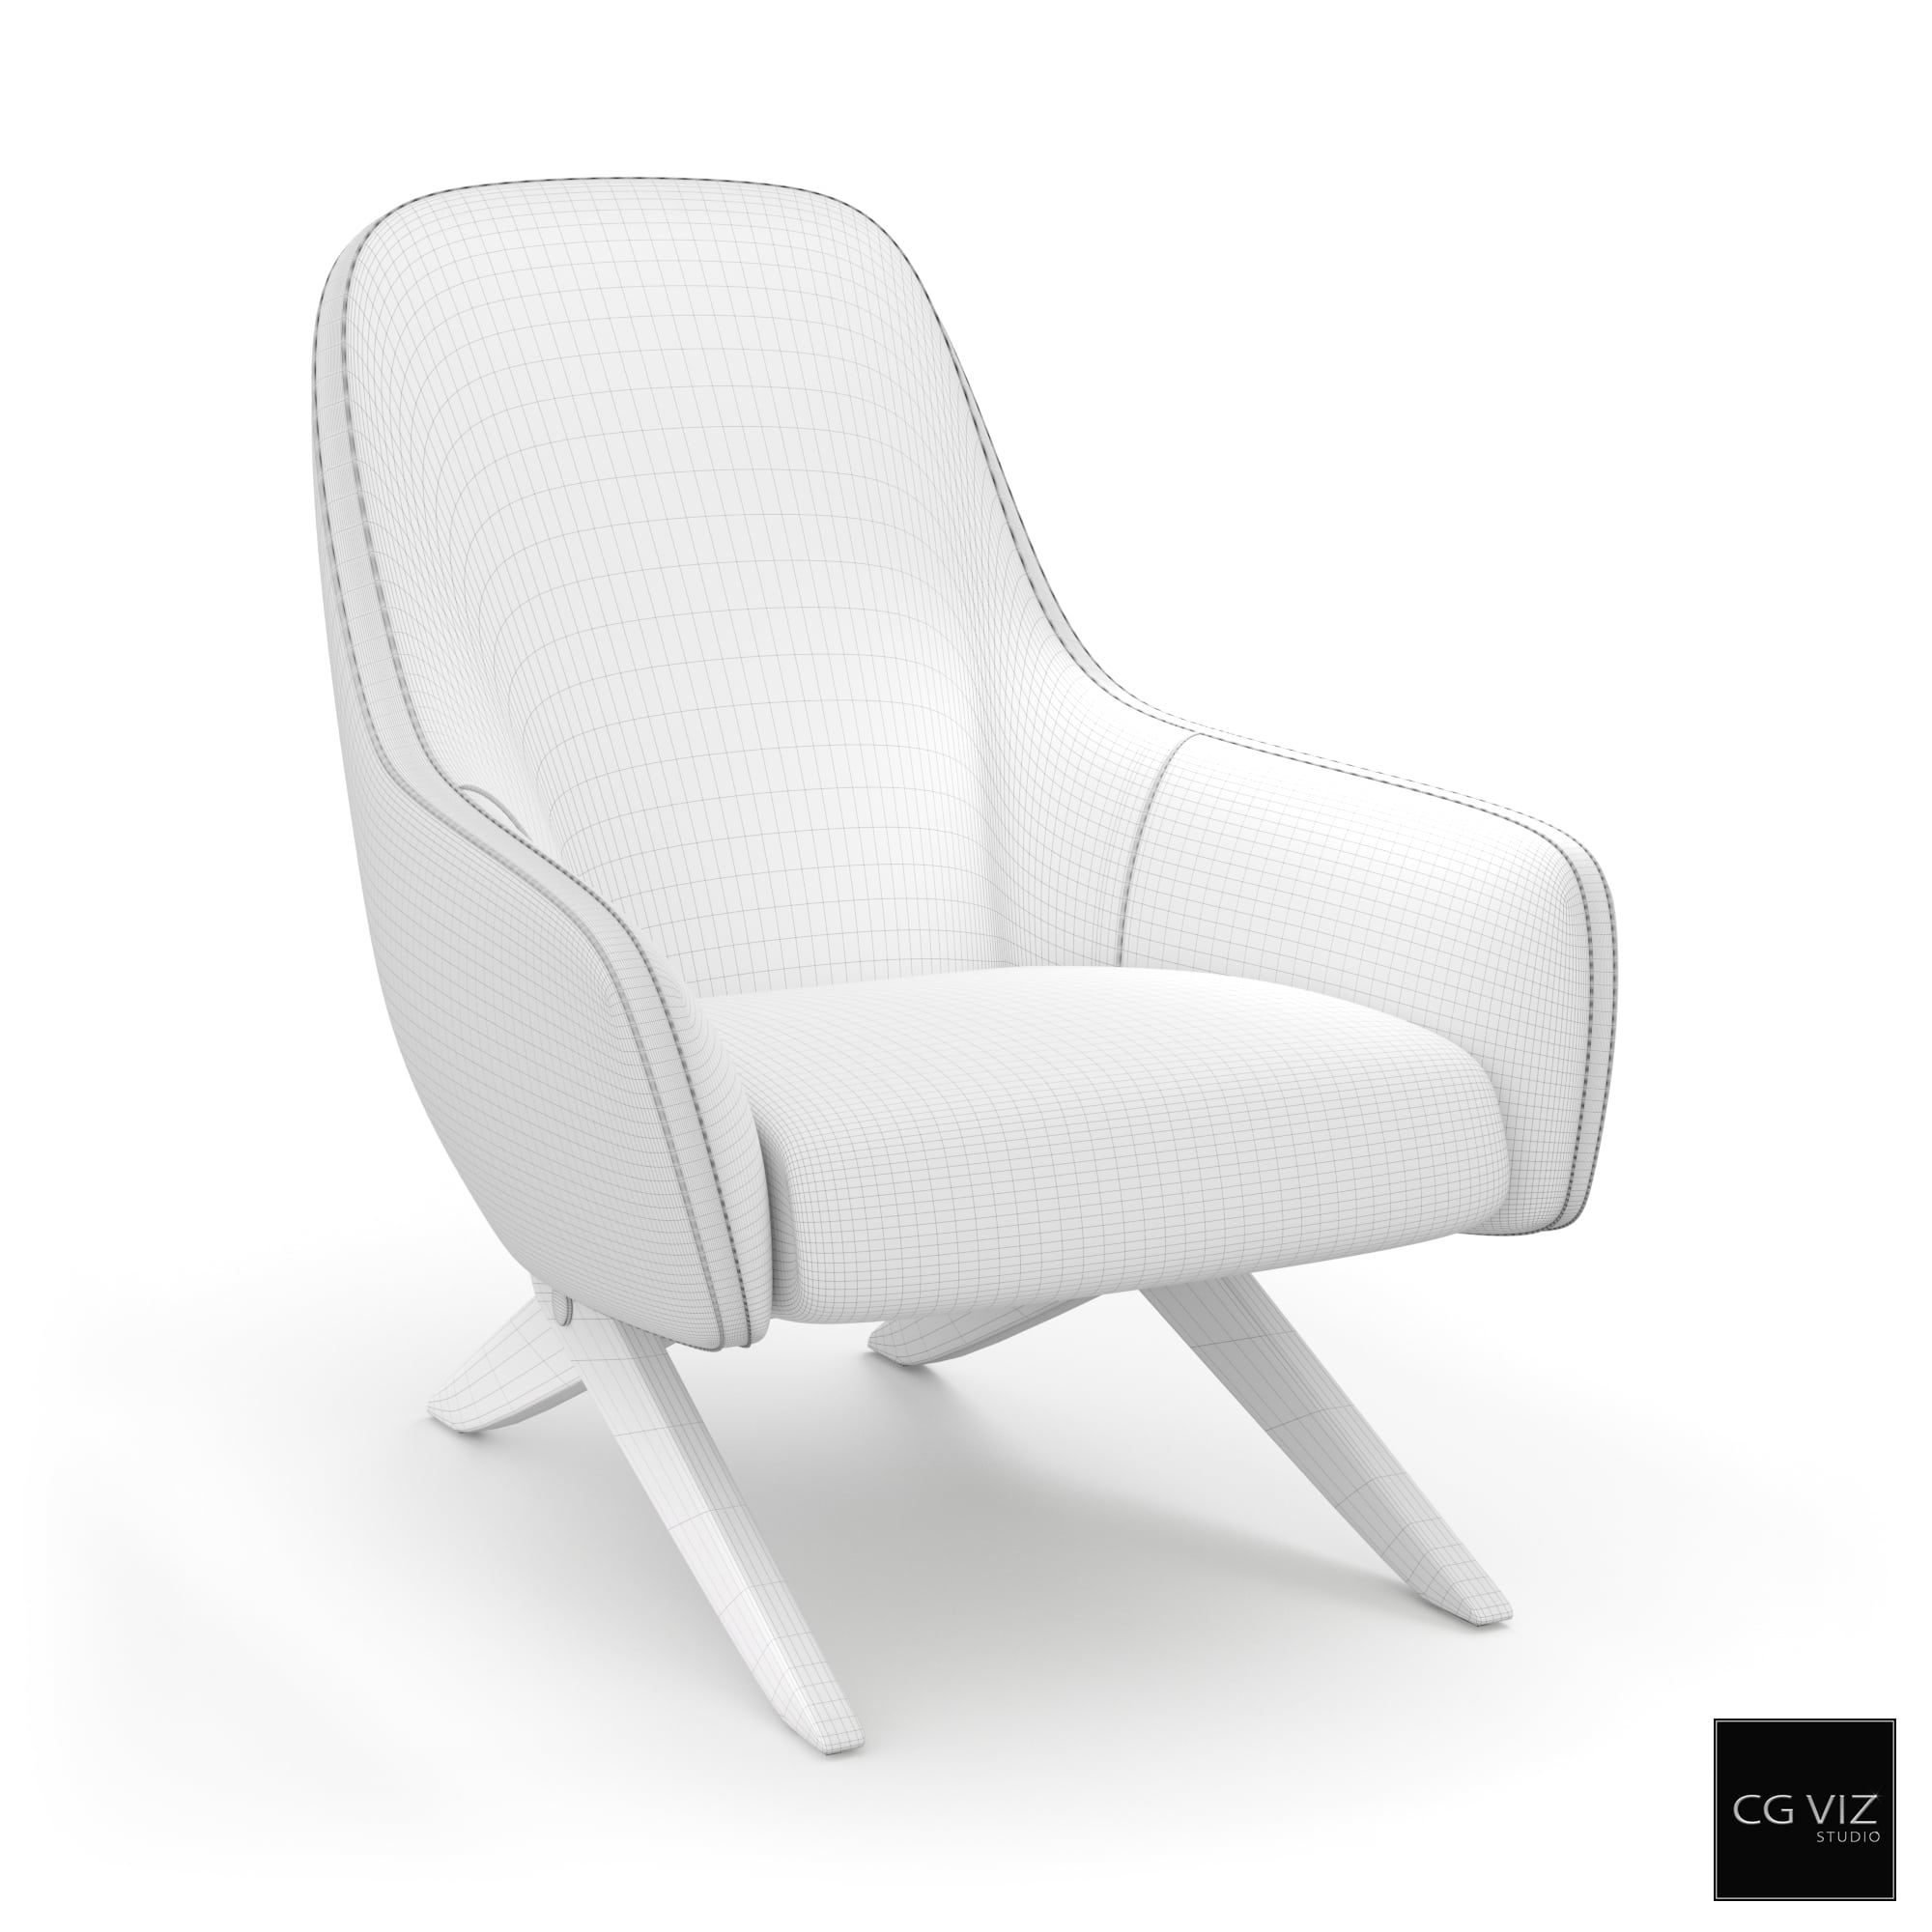 Wireframe View of Poiliform Marlon Lounge Armchair by CGVIZSTUDIO